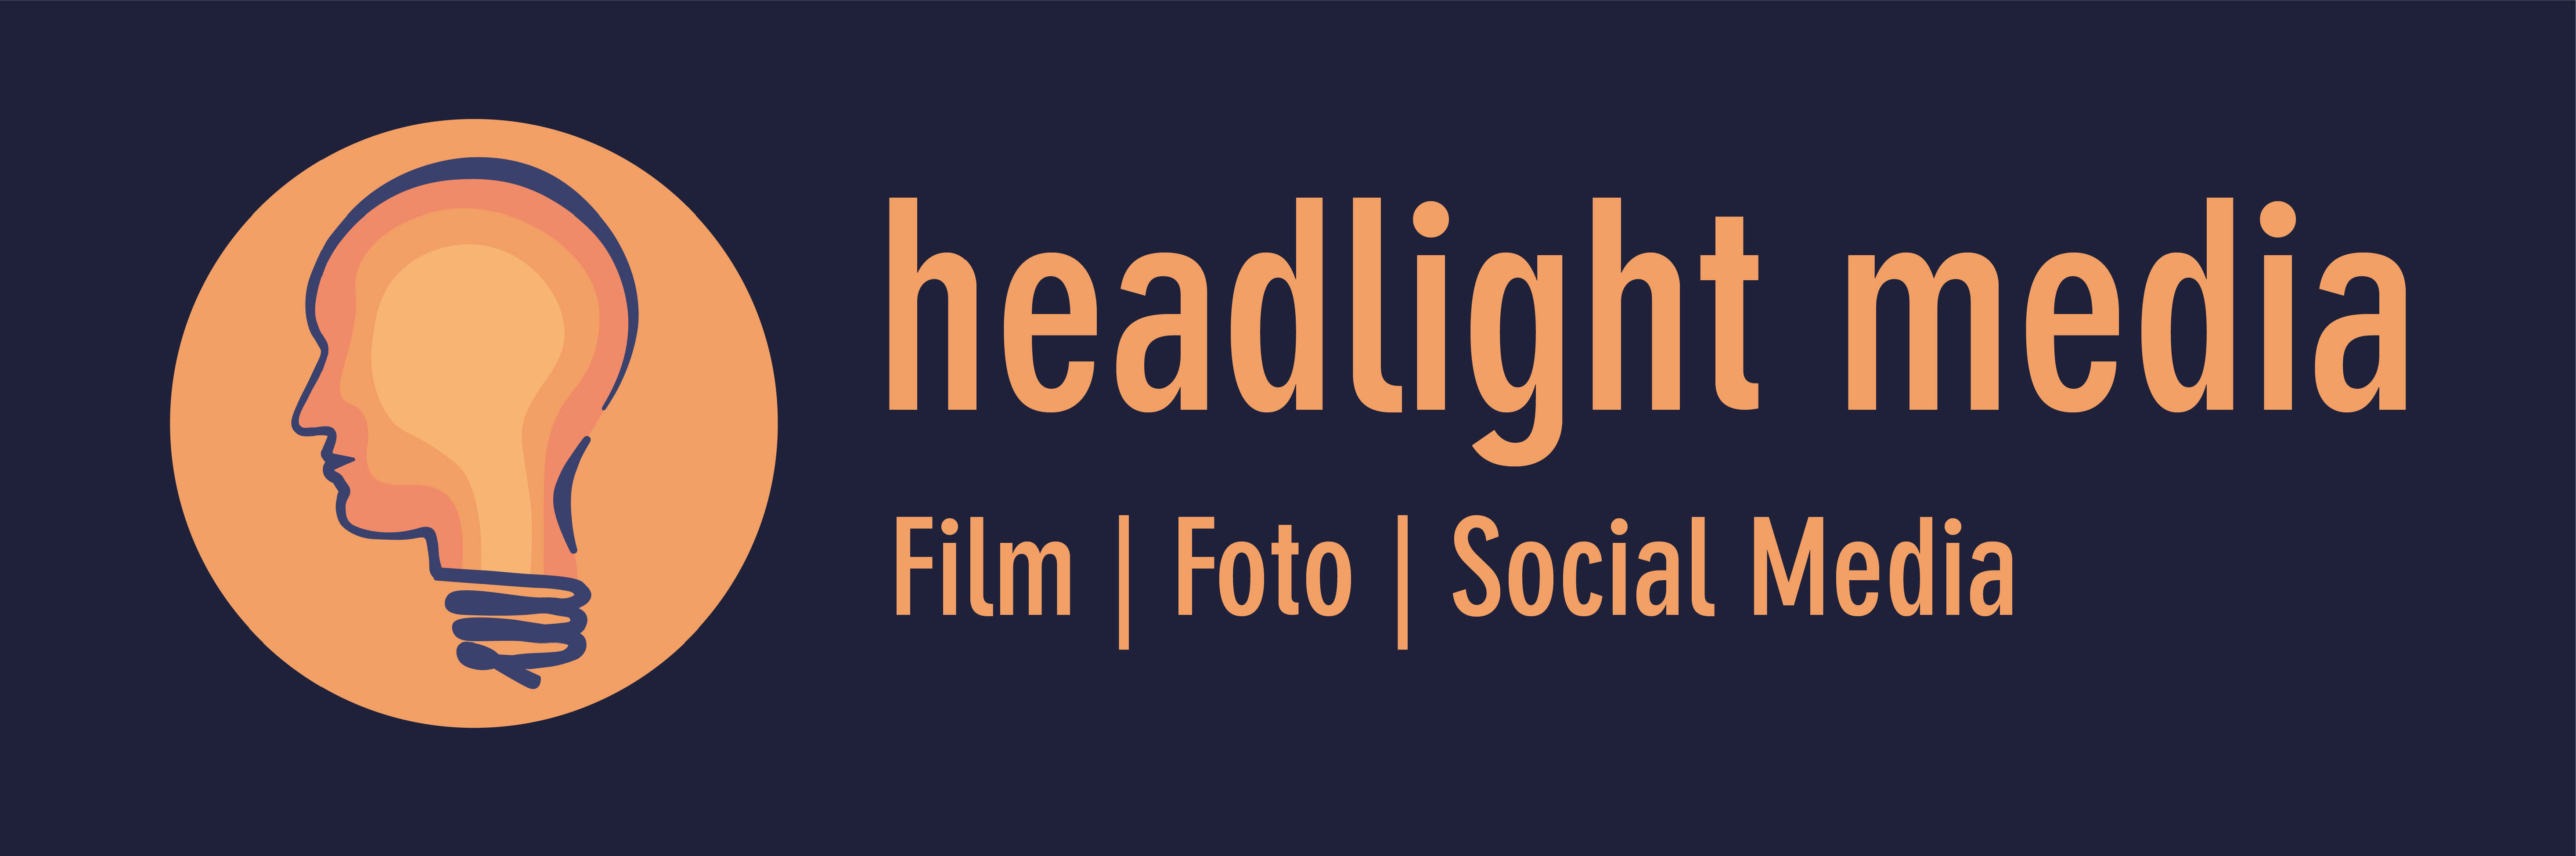 headlight media